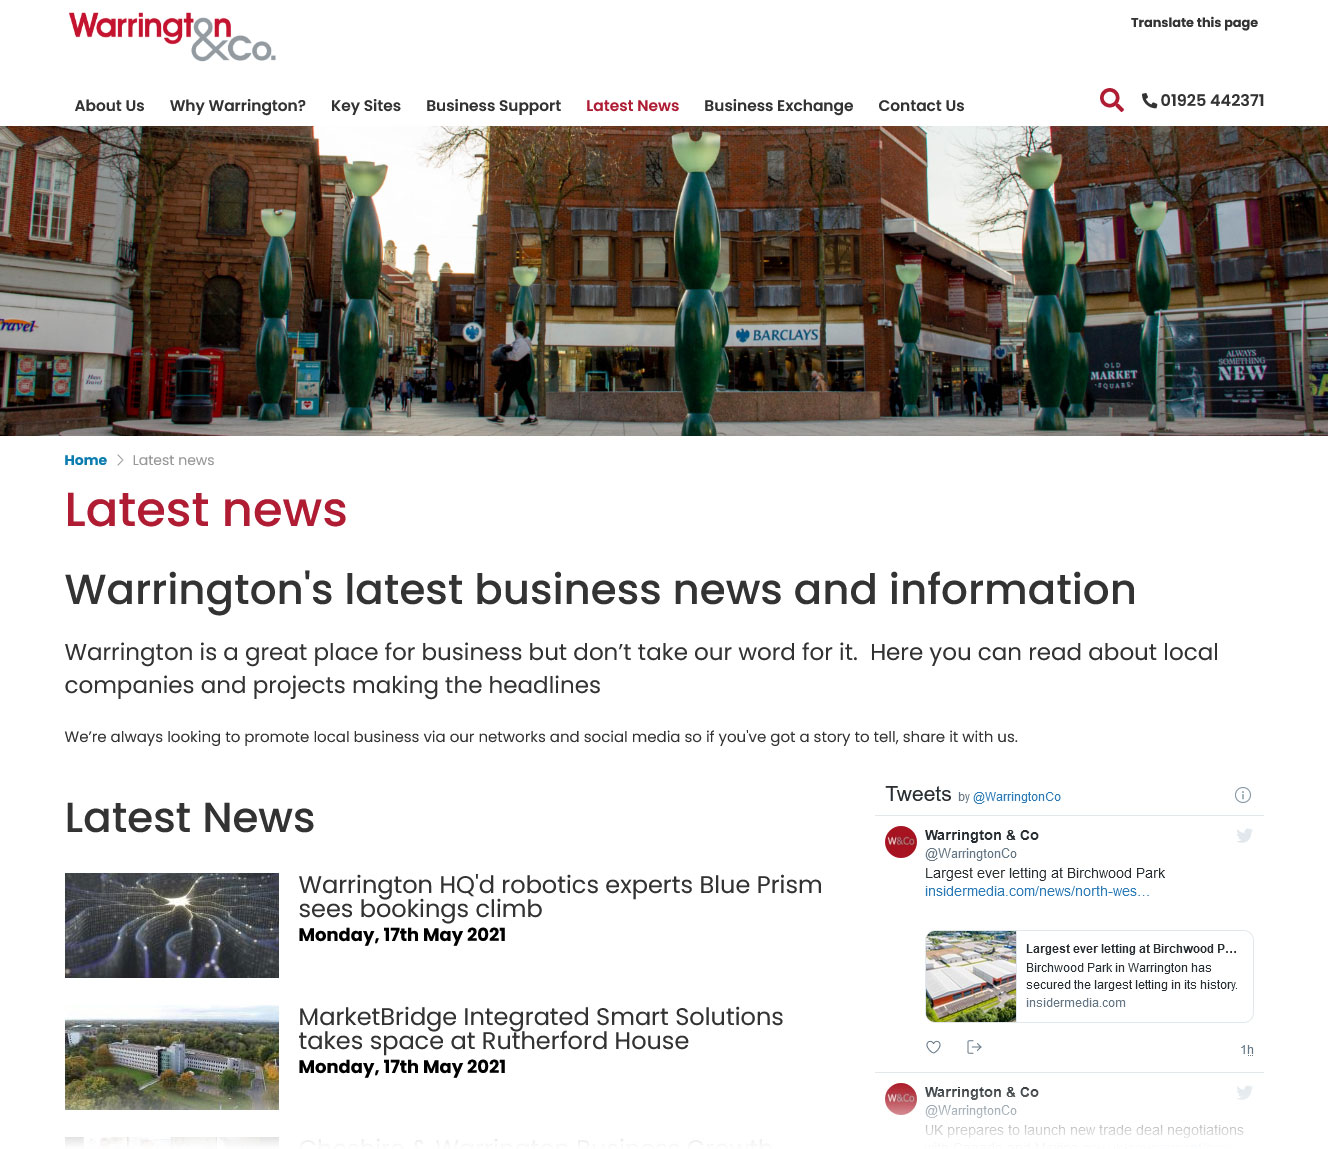 A screenshot of the Warrington & Co News page.